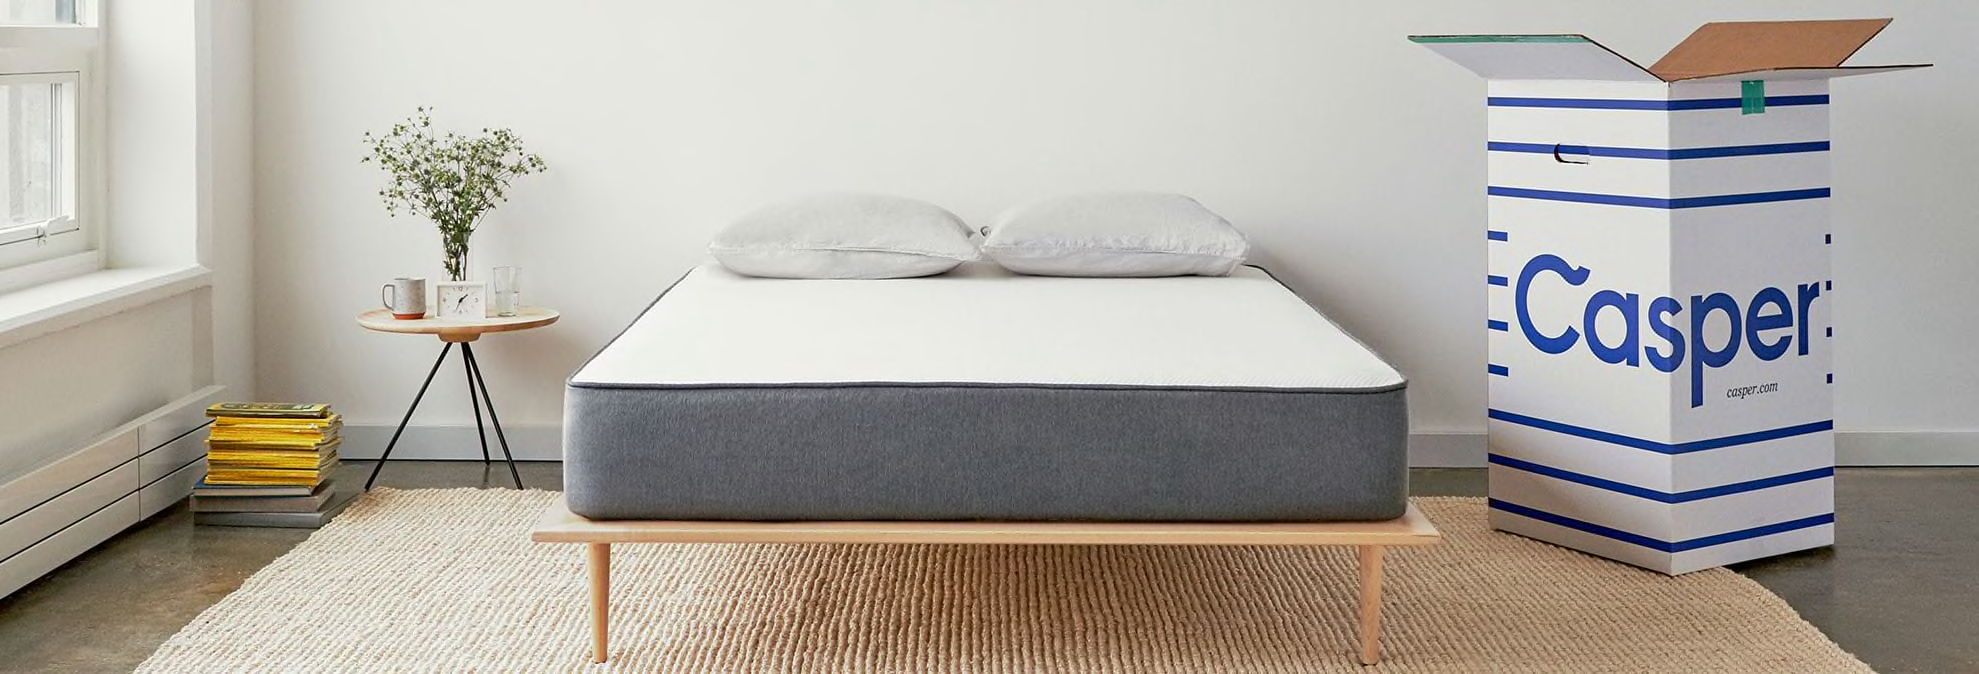 baby bed mattress target